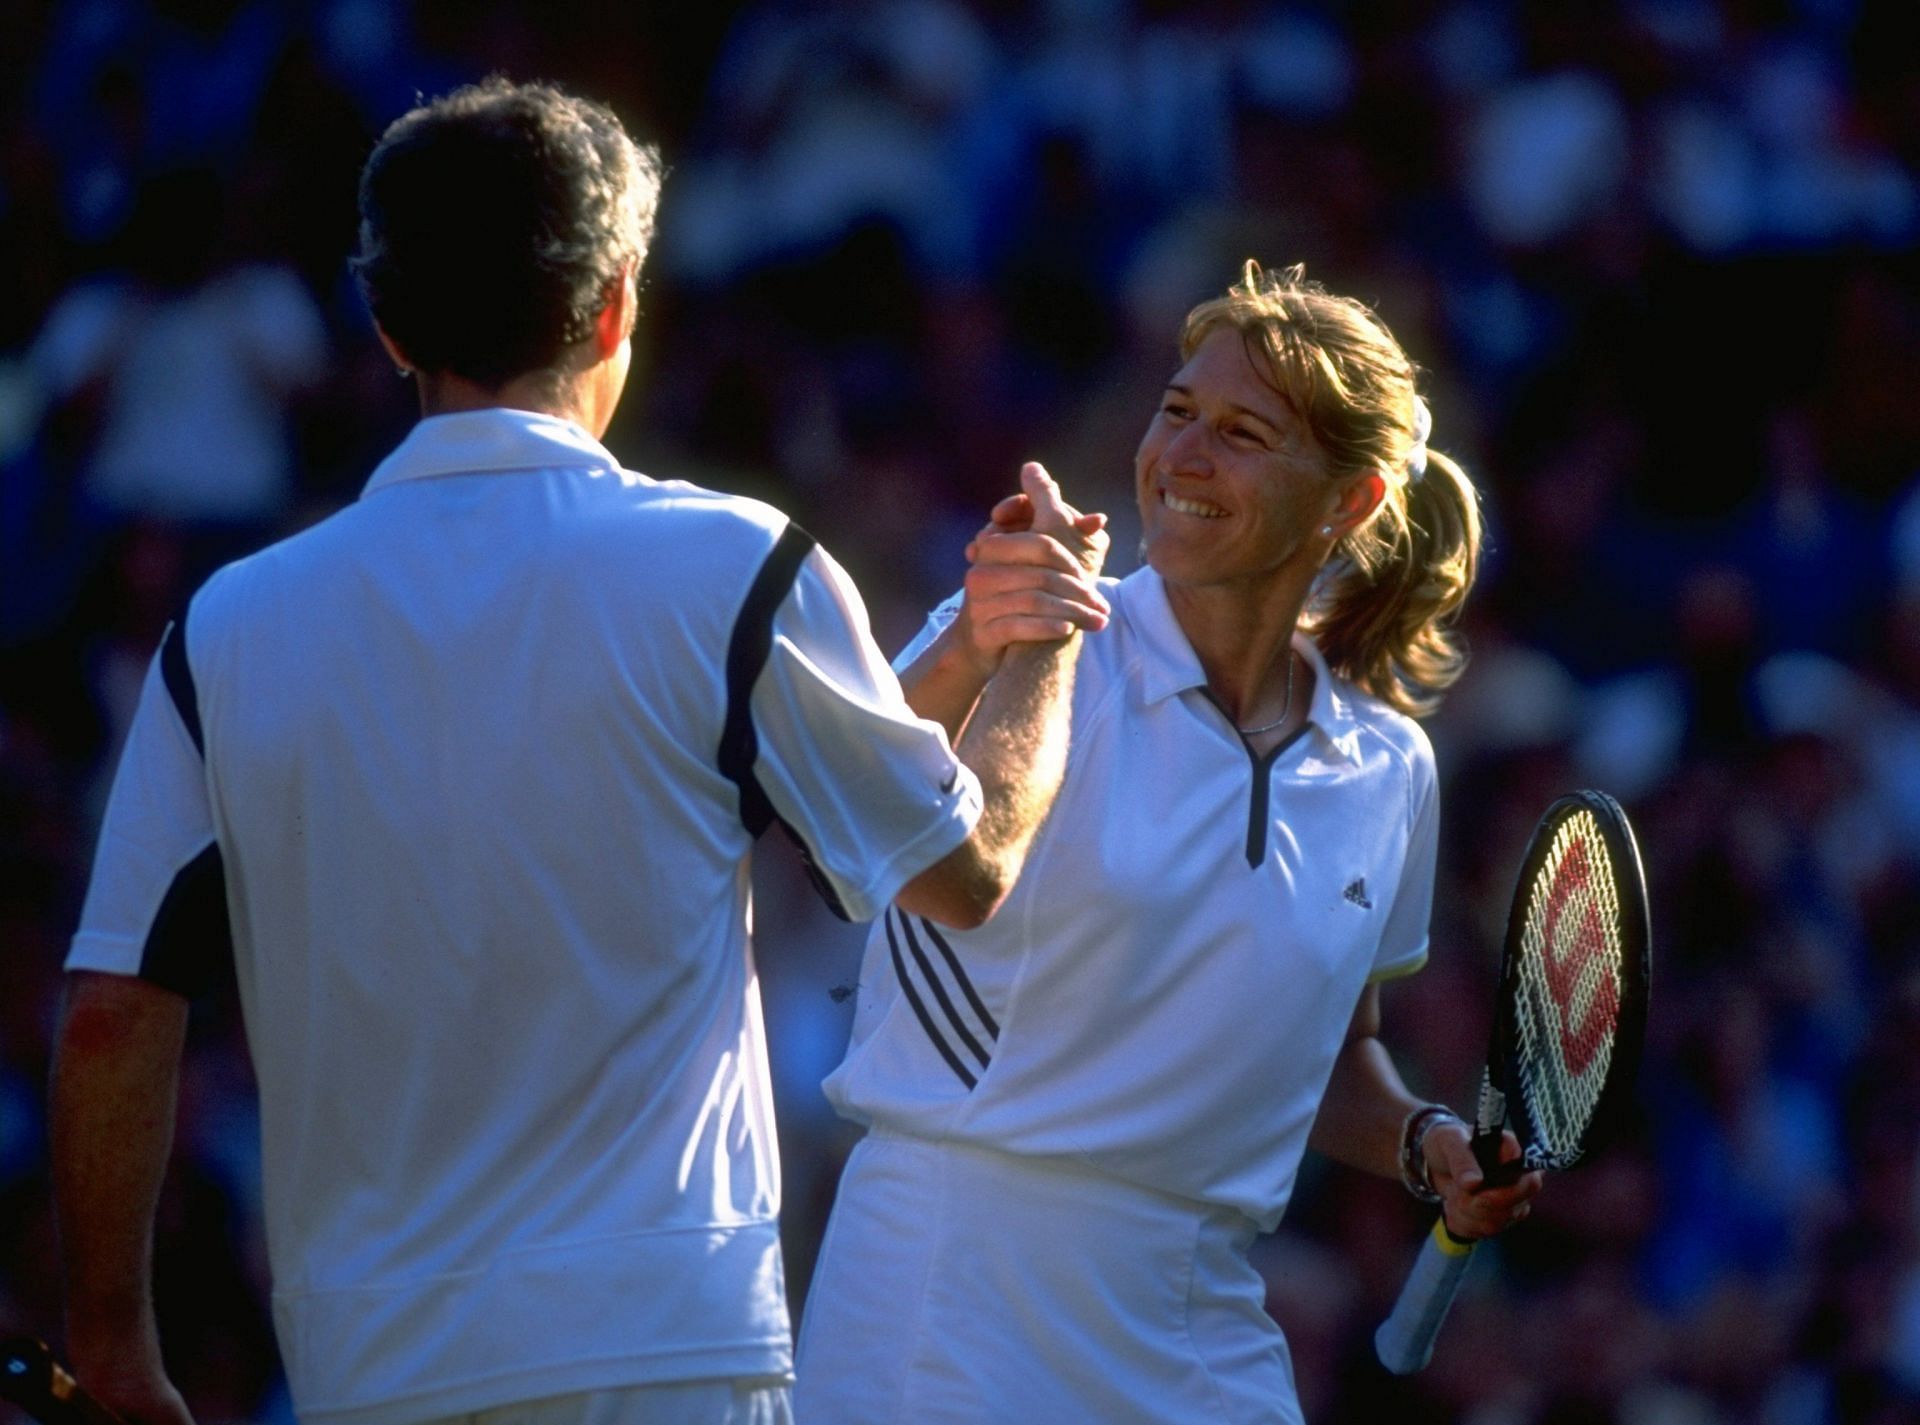 John McEnroe and Steffi Graf at the 1999 Wimbledon Championships